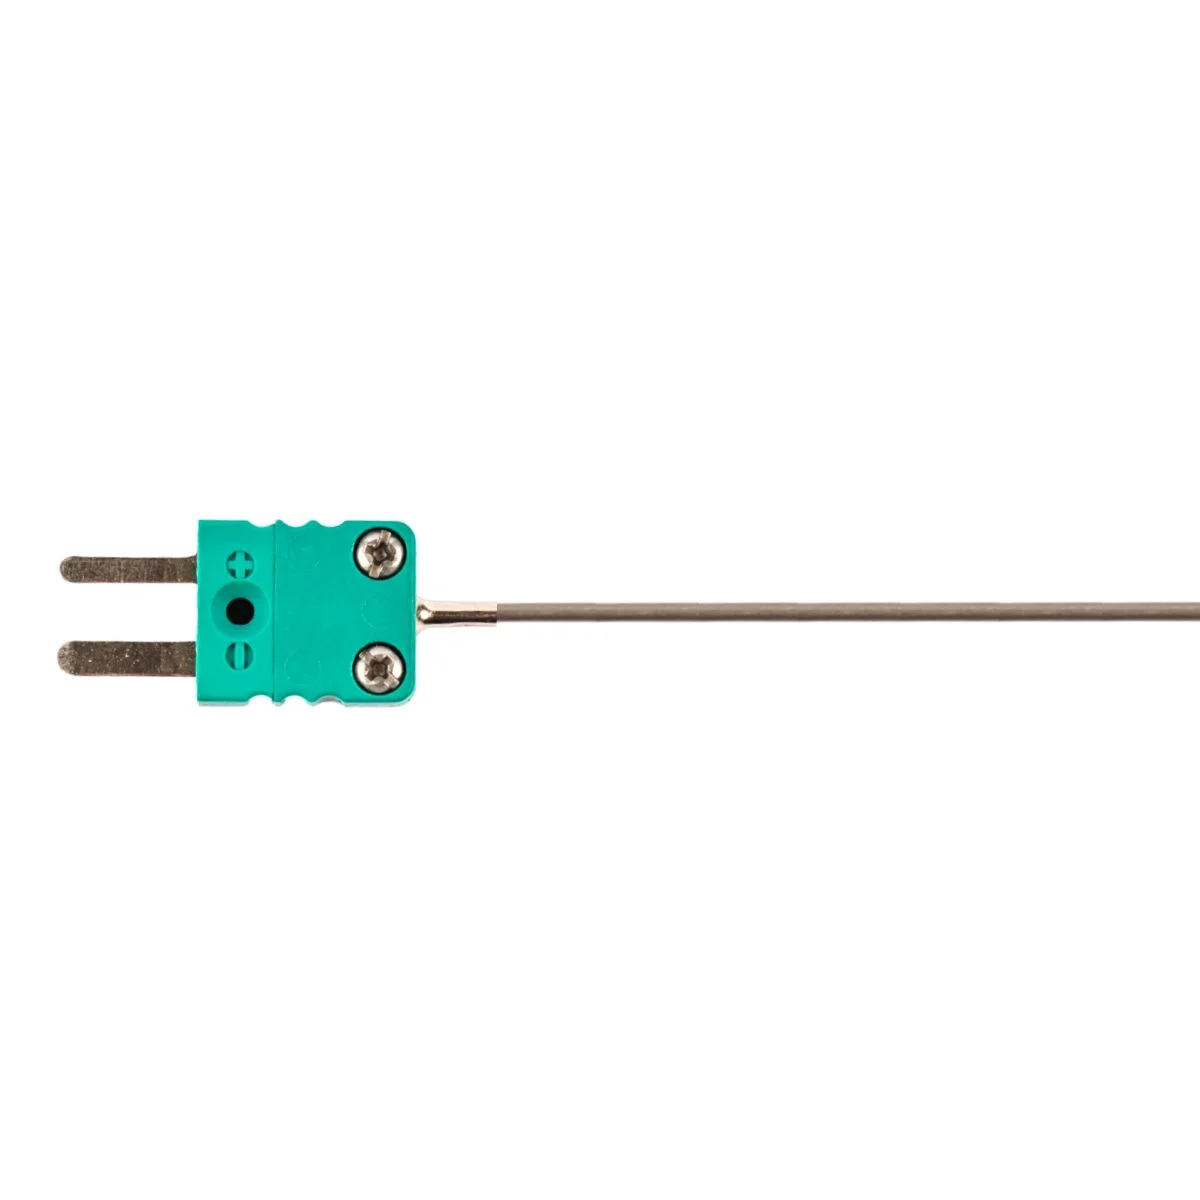 Mi thermocouple with mini plug type K